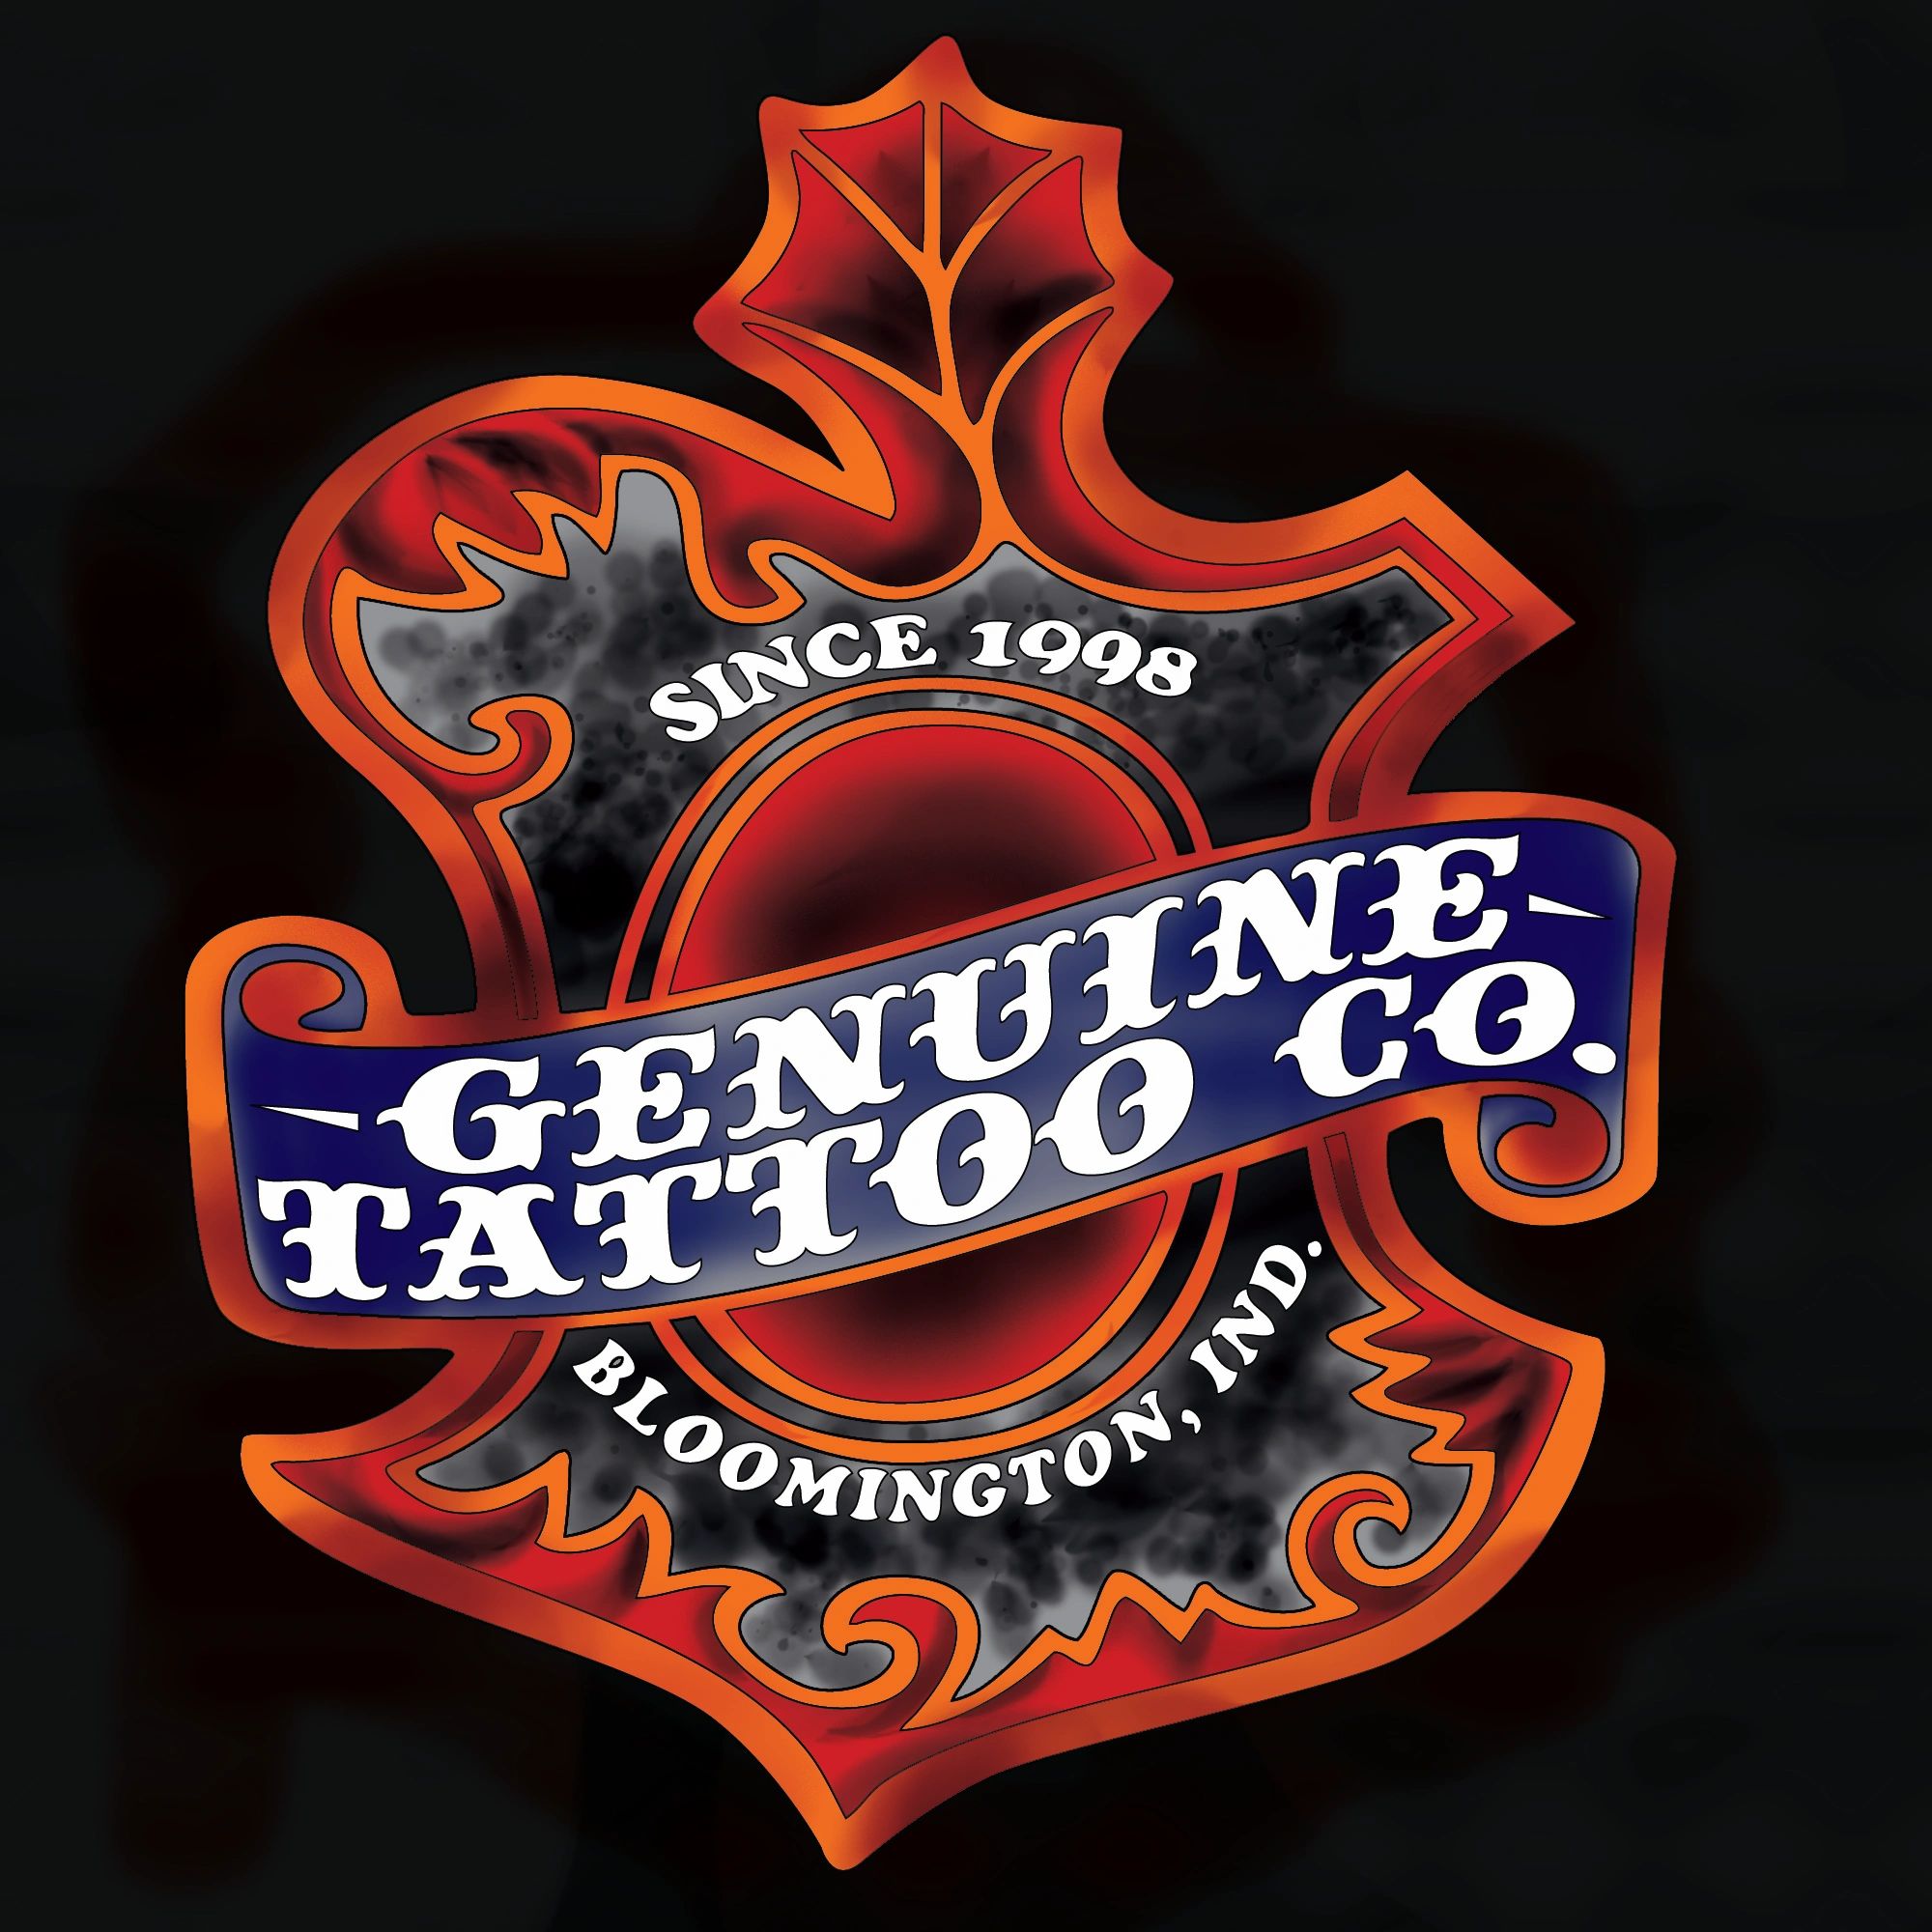 genuine tattoo co, bloomington indiana, tattoo, body piercing tattoos, piercings, iu, tattoo shops